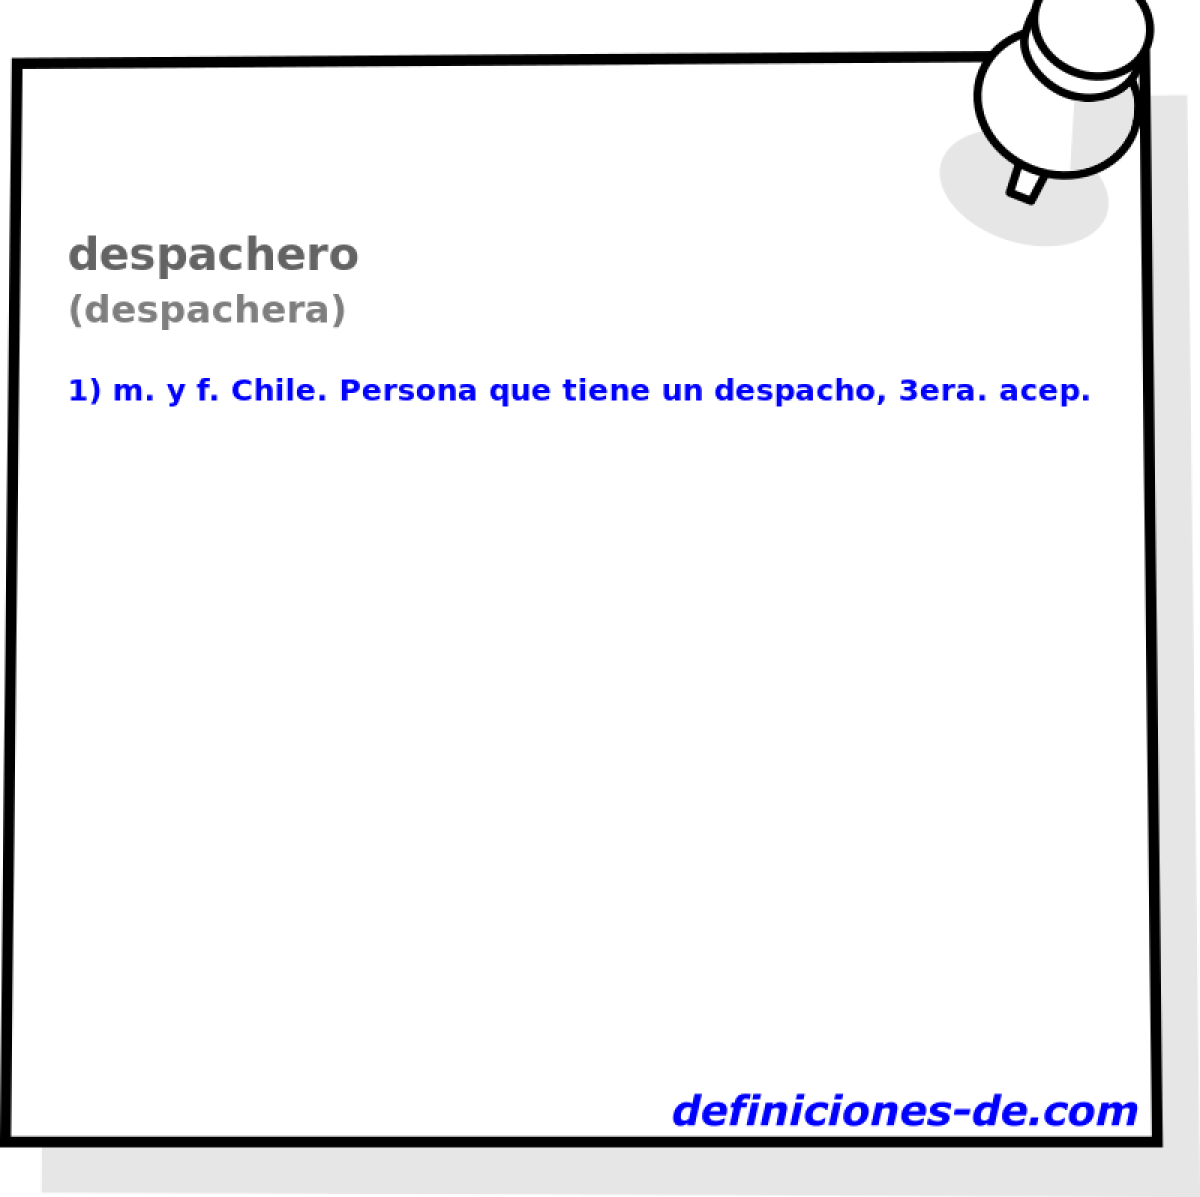 despachero (despachera)